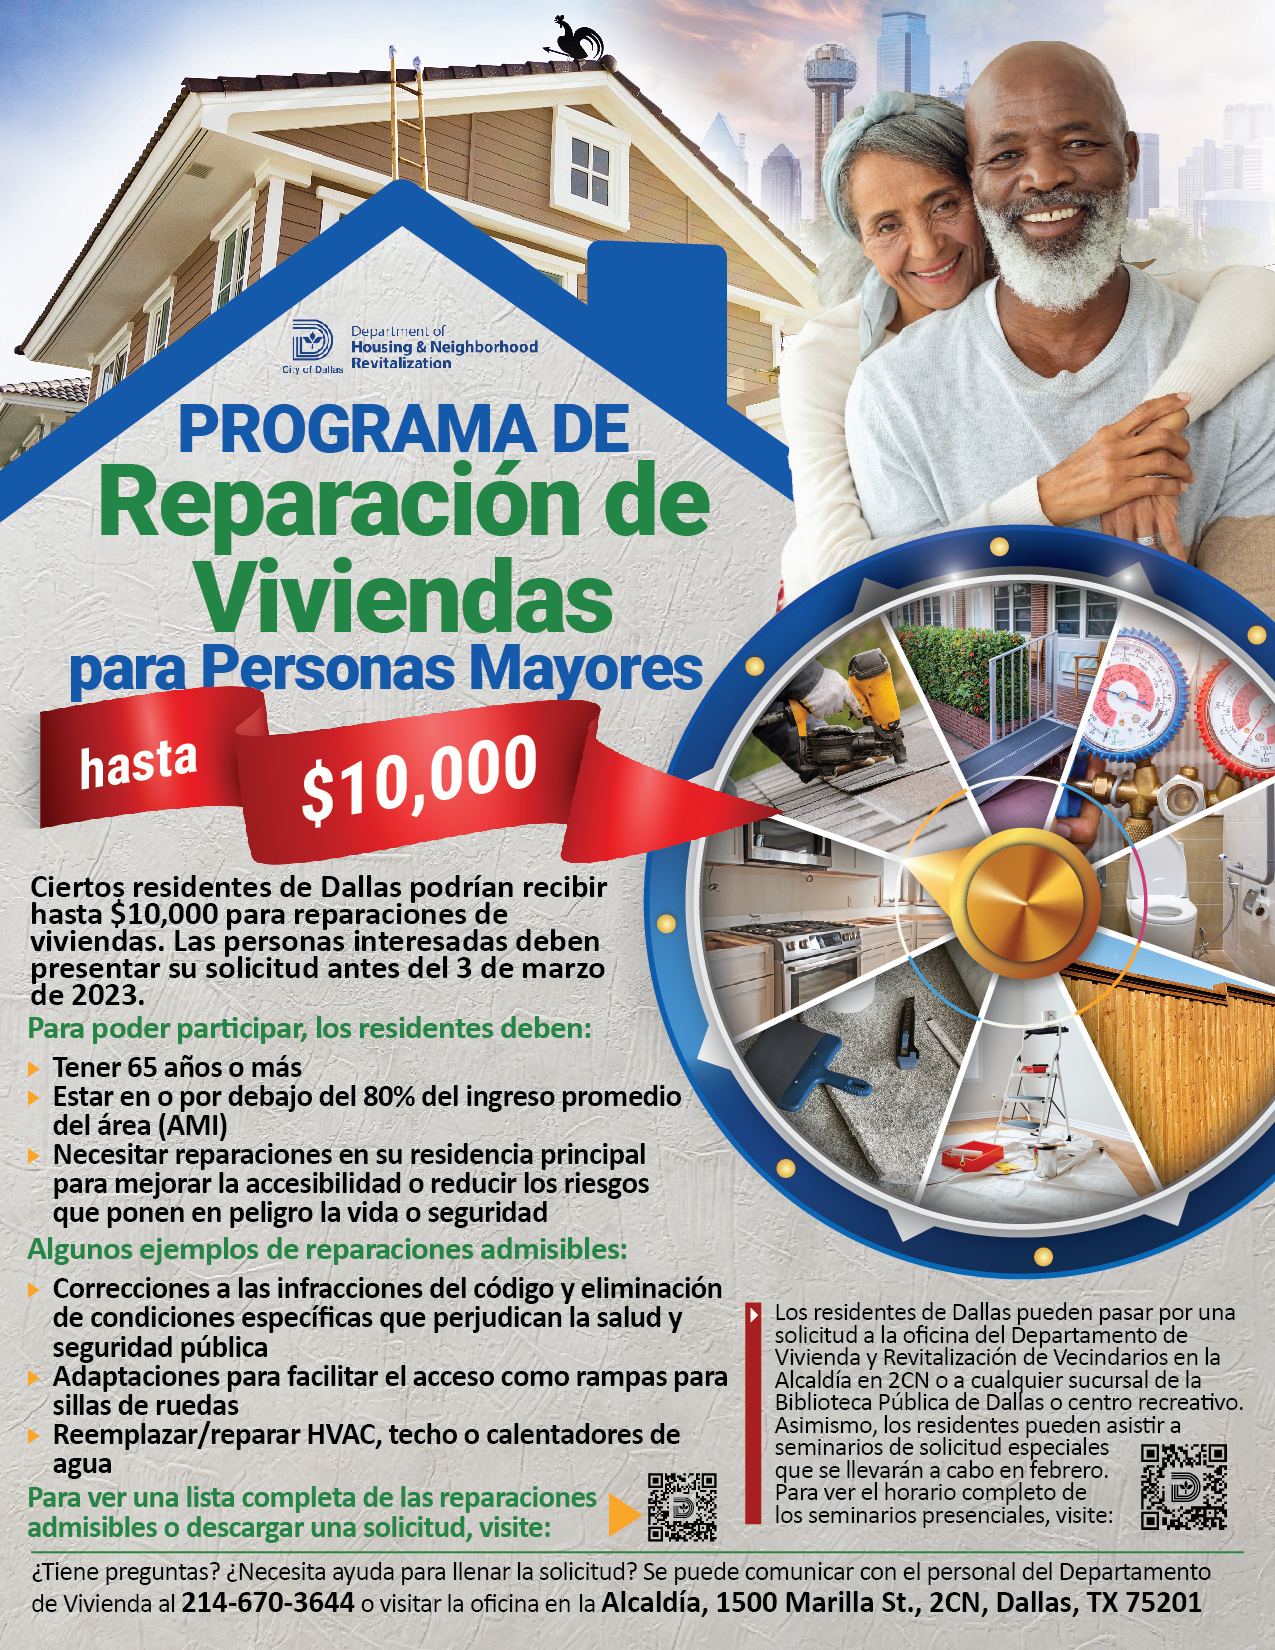 HOU_Marketing Plan for Senior Home Repair Program_Spanish.jpg